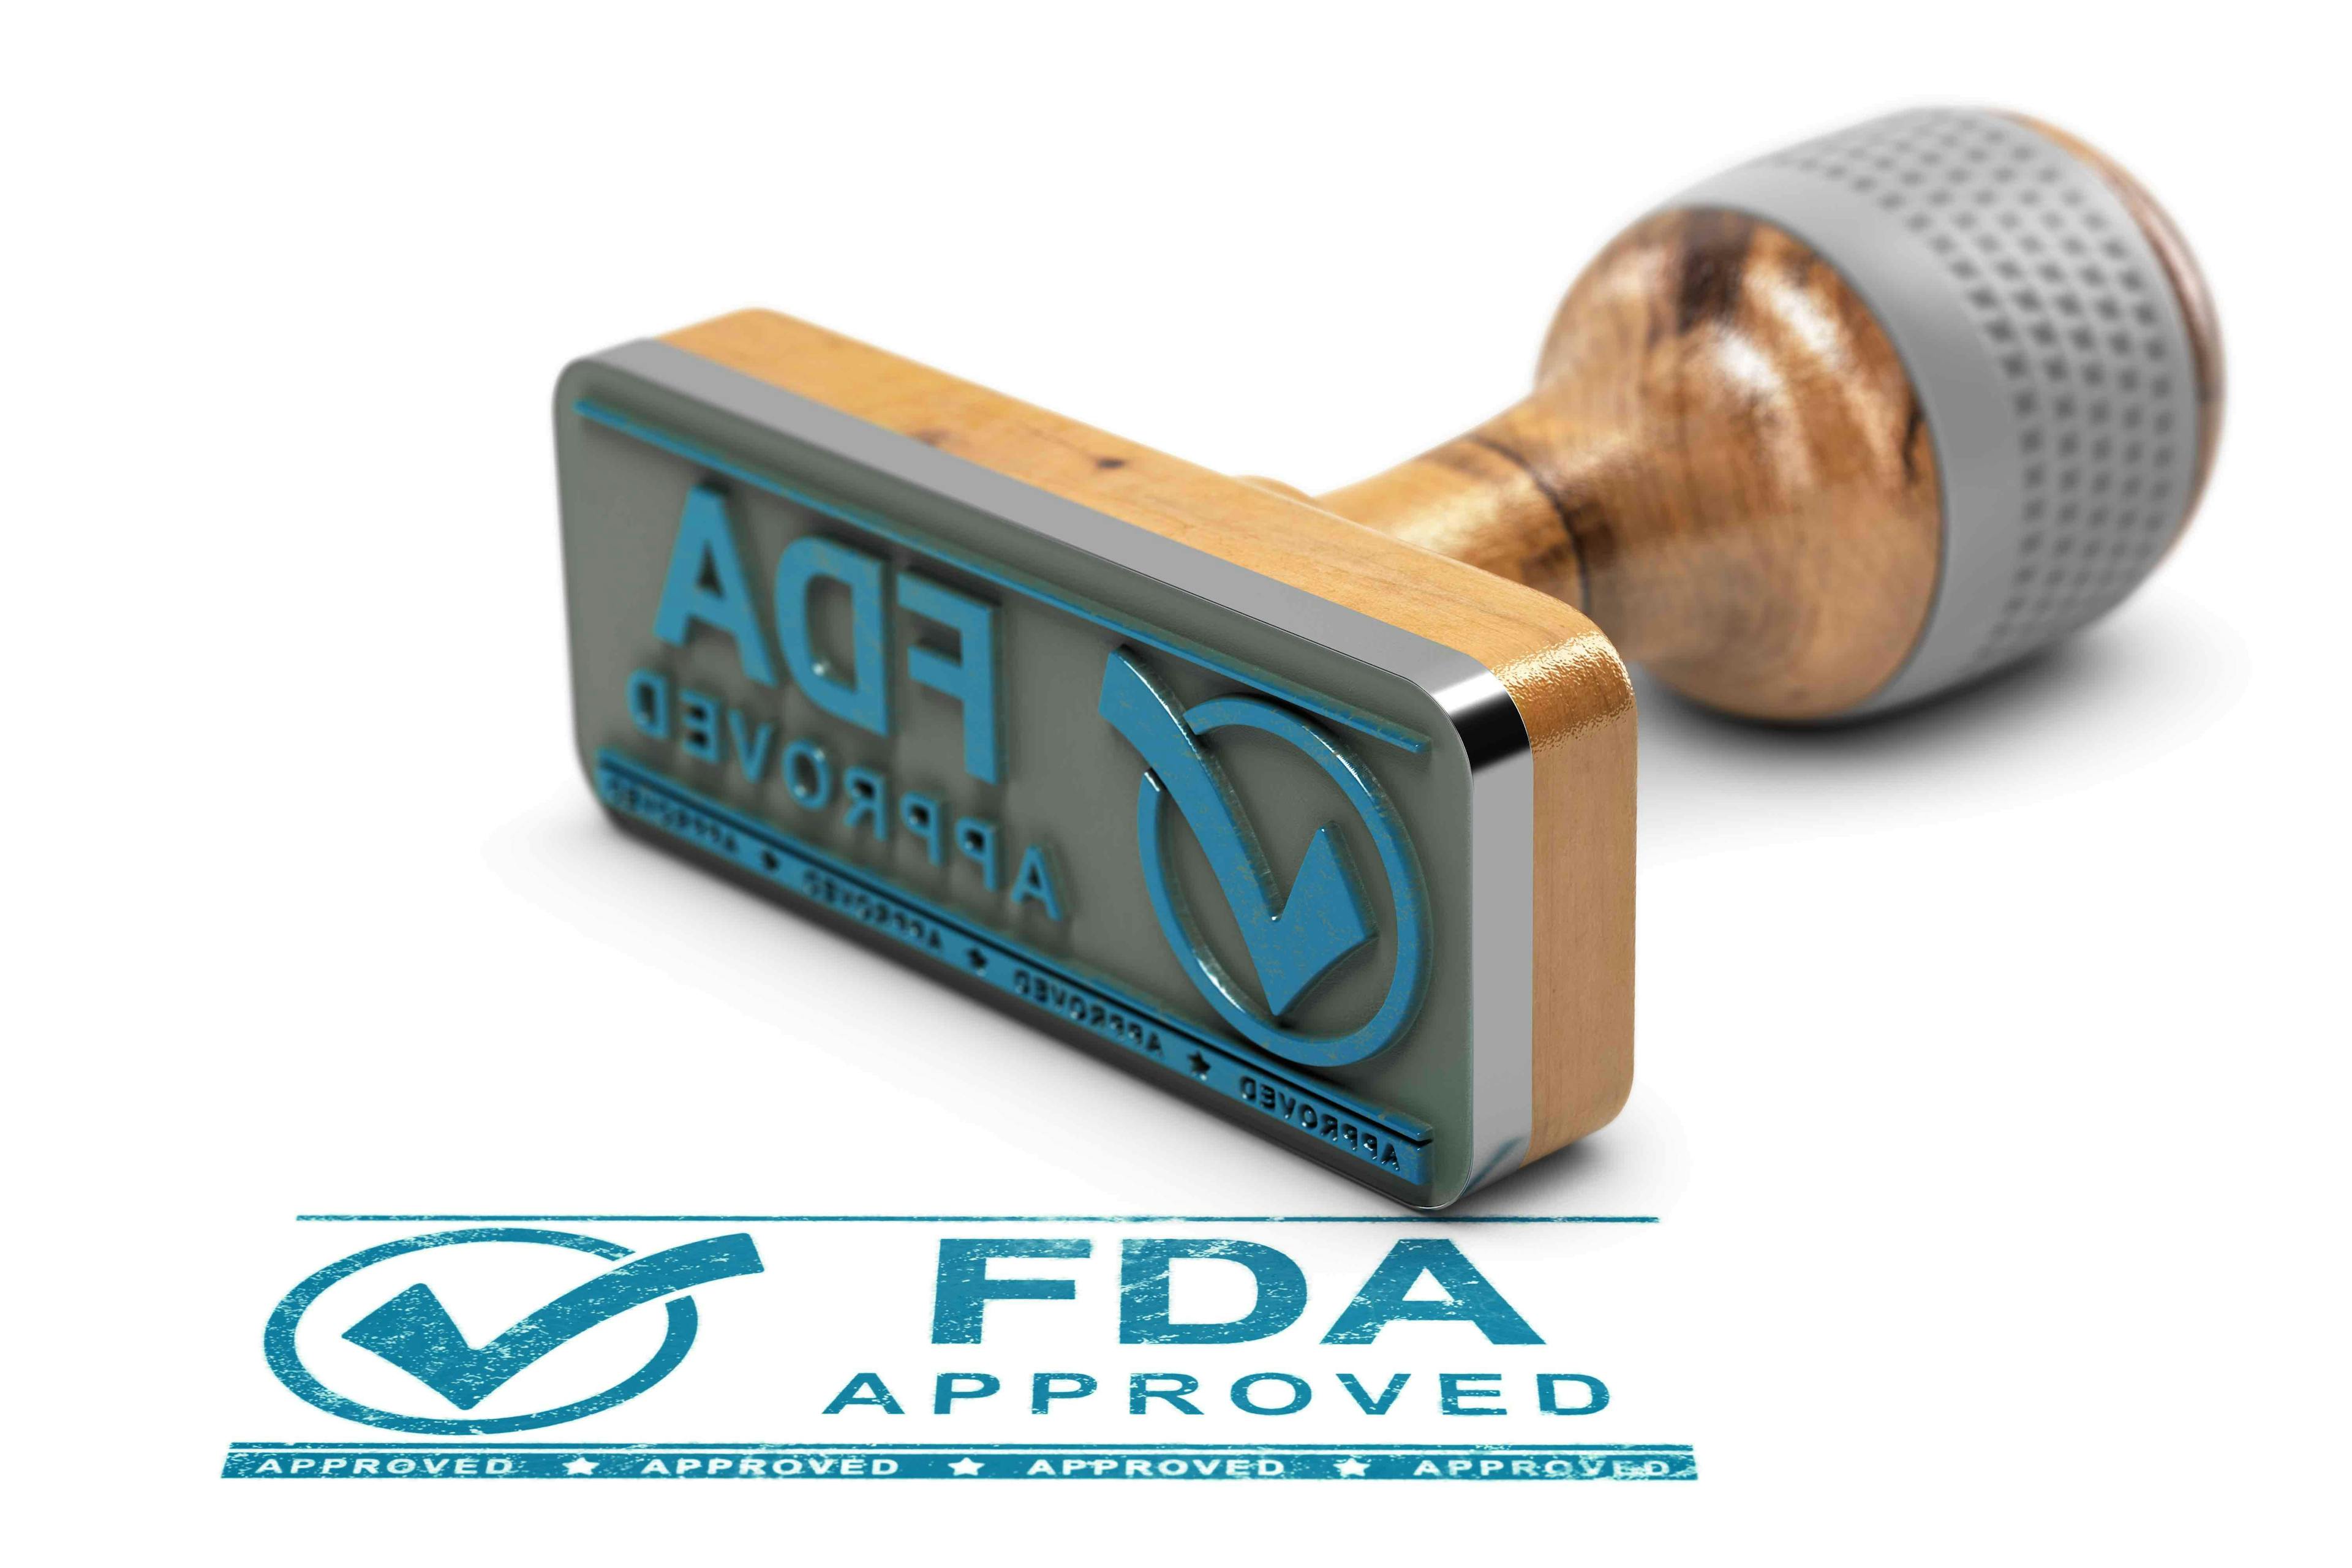 FDA approval stamp | Image credit: Olivier Le Moal - stock.adobe.com